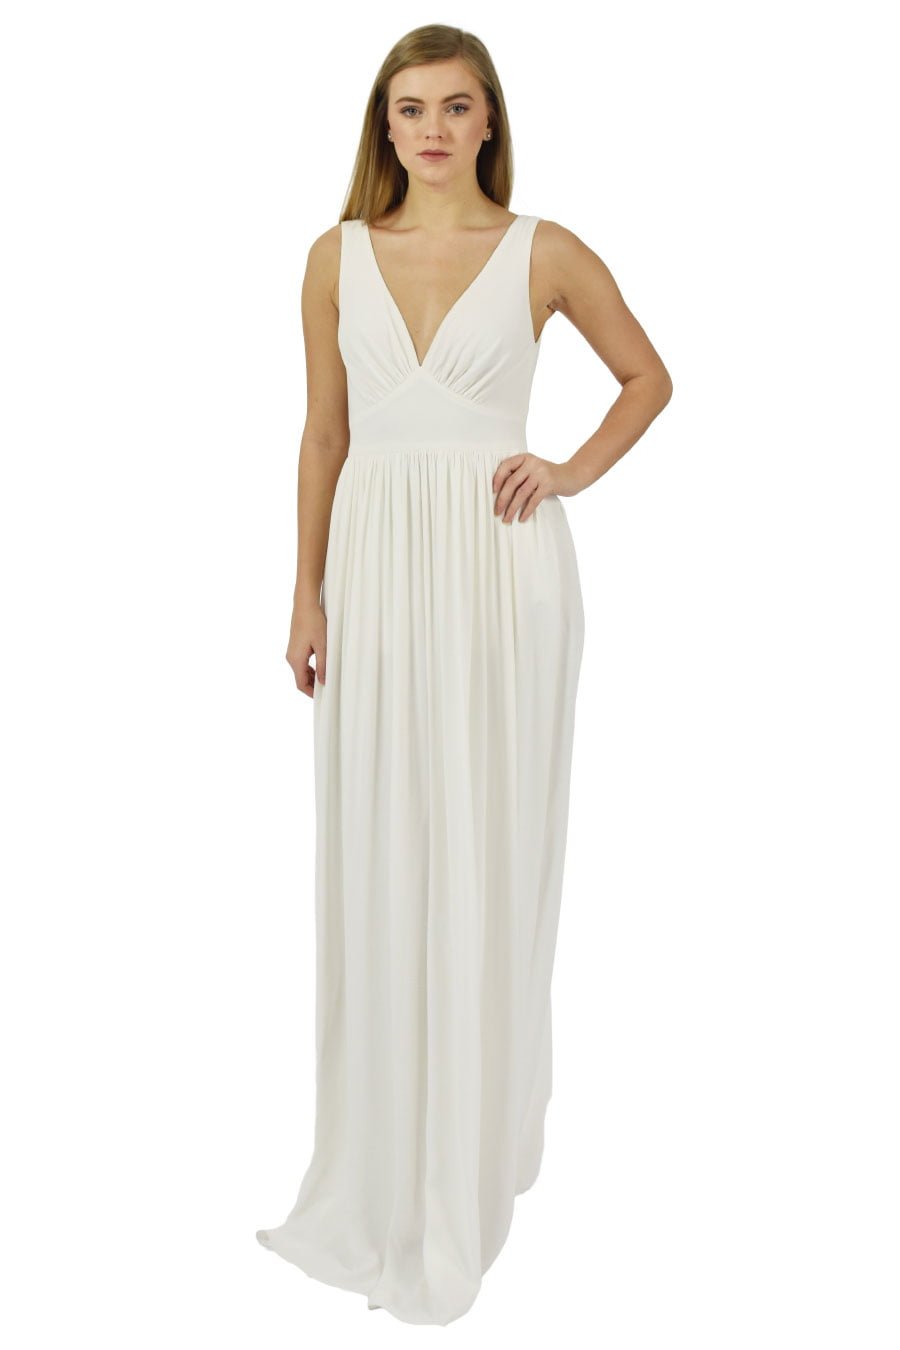 Norma Maxi Dress BY PETRIISKI|Gathered viscose wedding dress in ivory